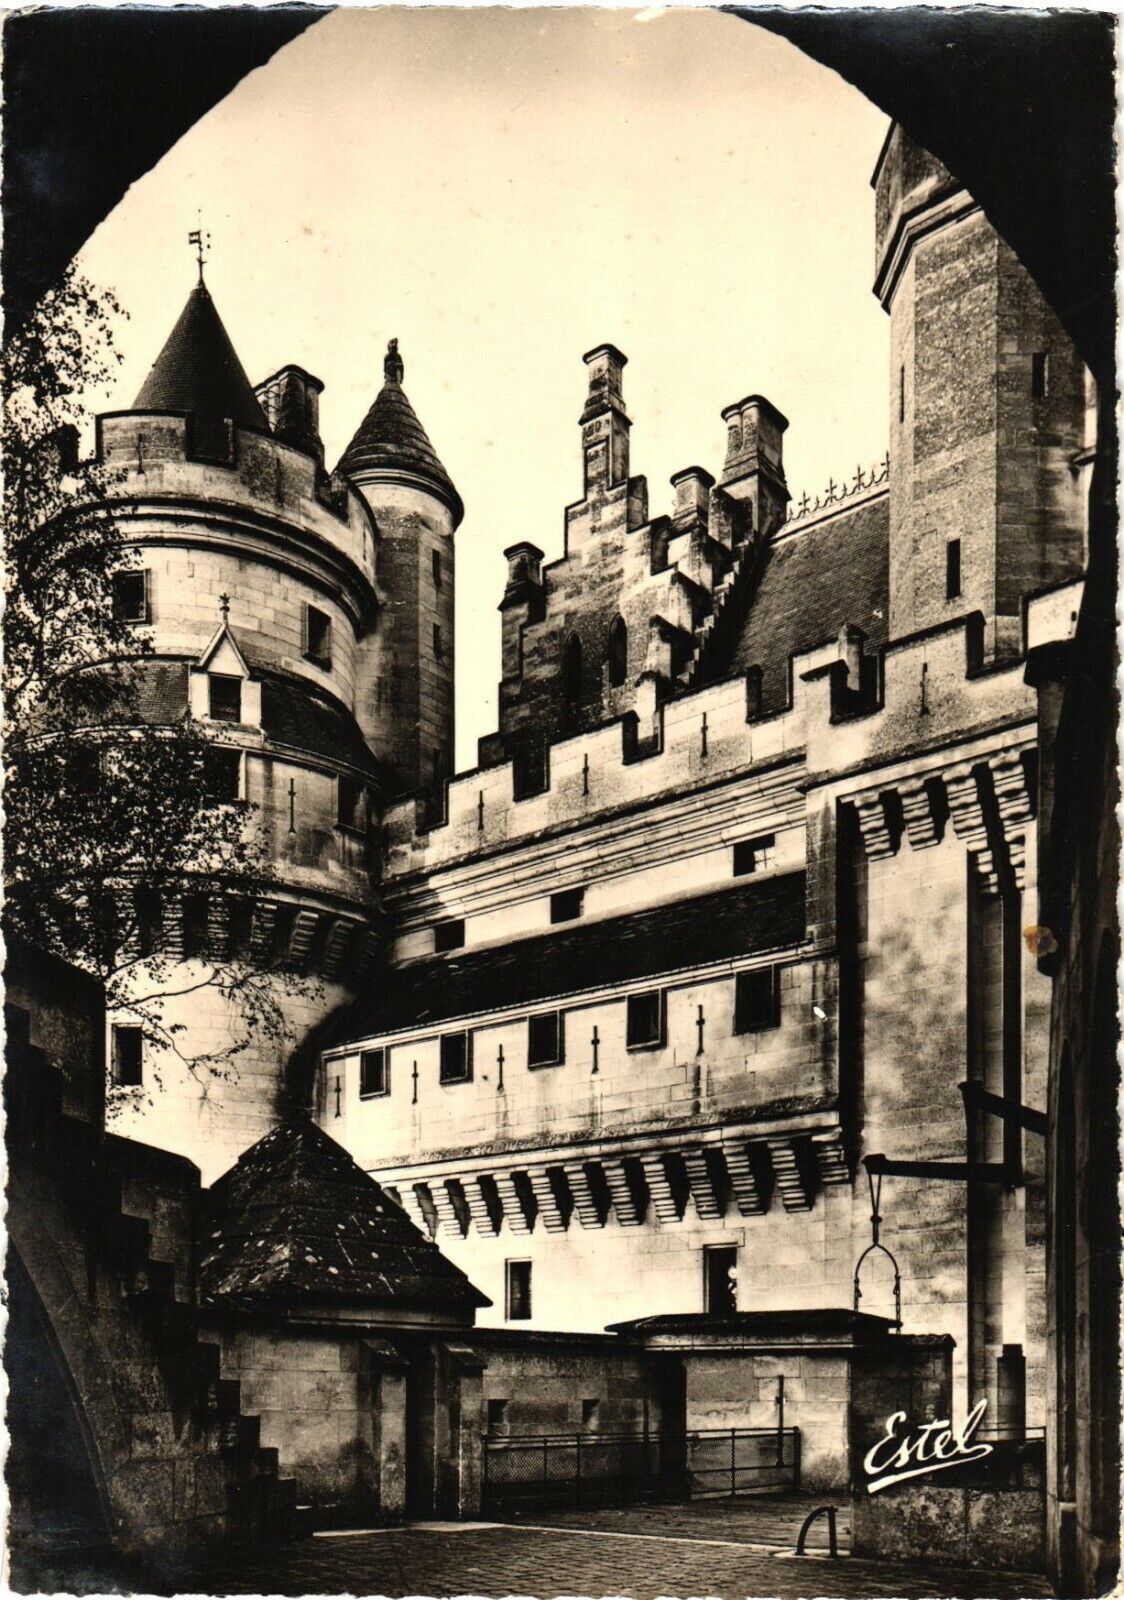 The Tower of Artus And Draw-Bridge, Château de Pierrefonds, France Postcard